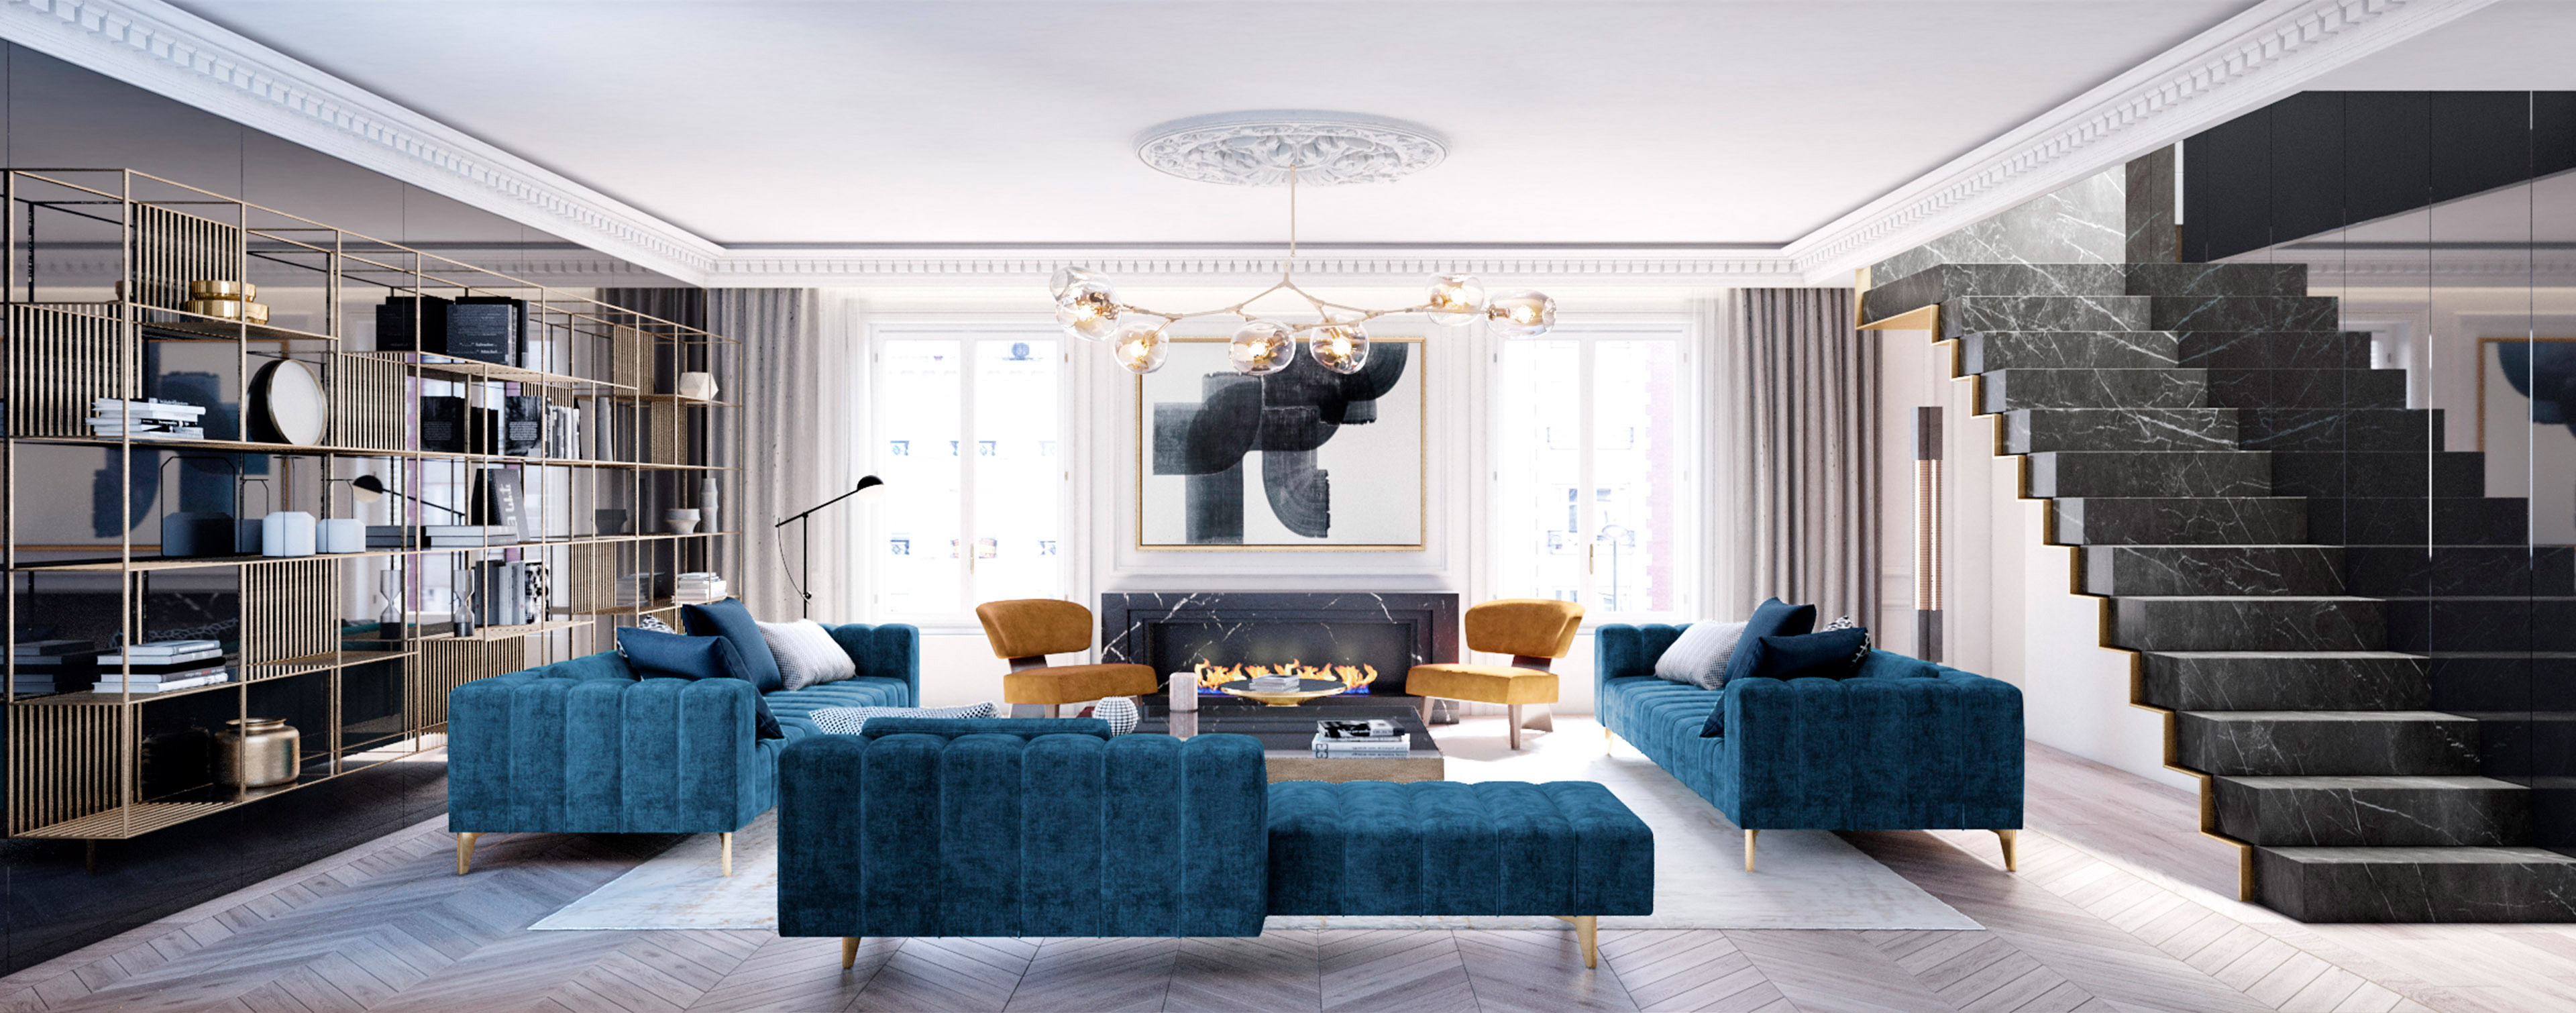 luv studio luxury architects paris saint germain penthouse apartment IMG 01 - St Germain Apartment 